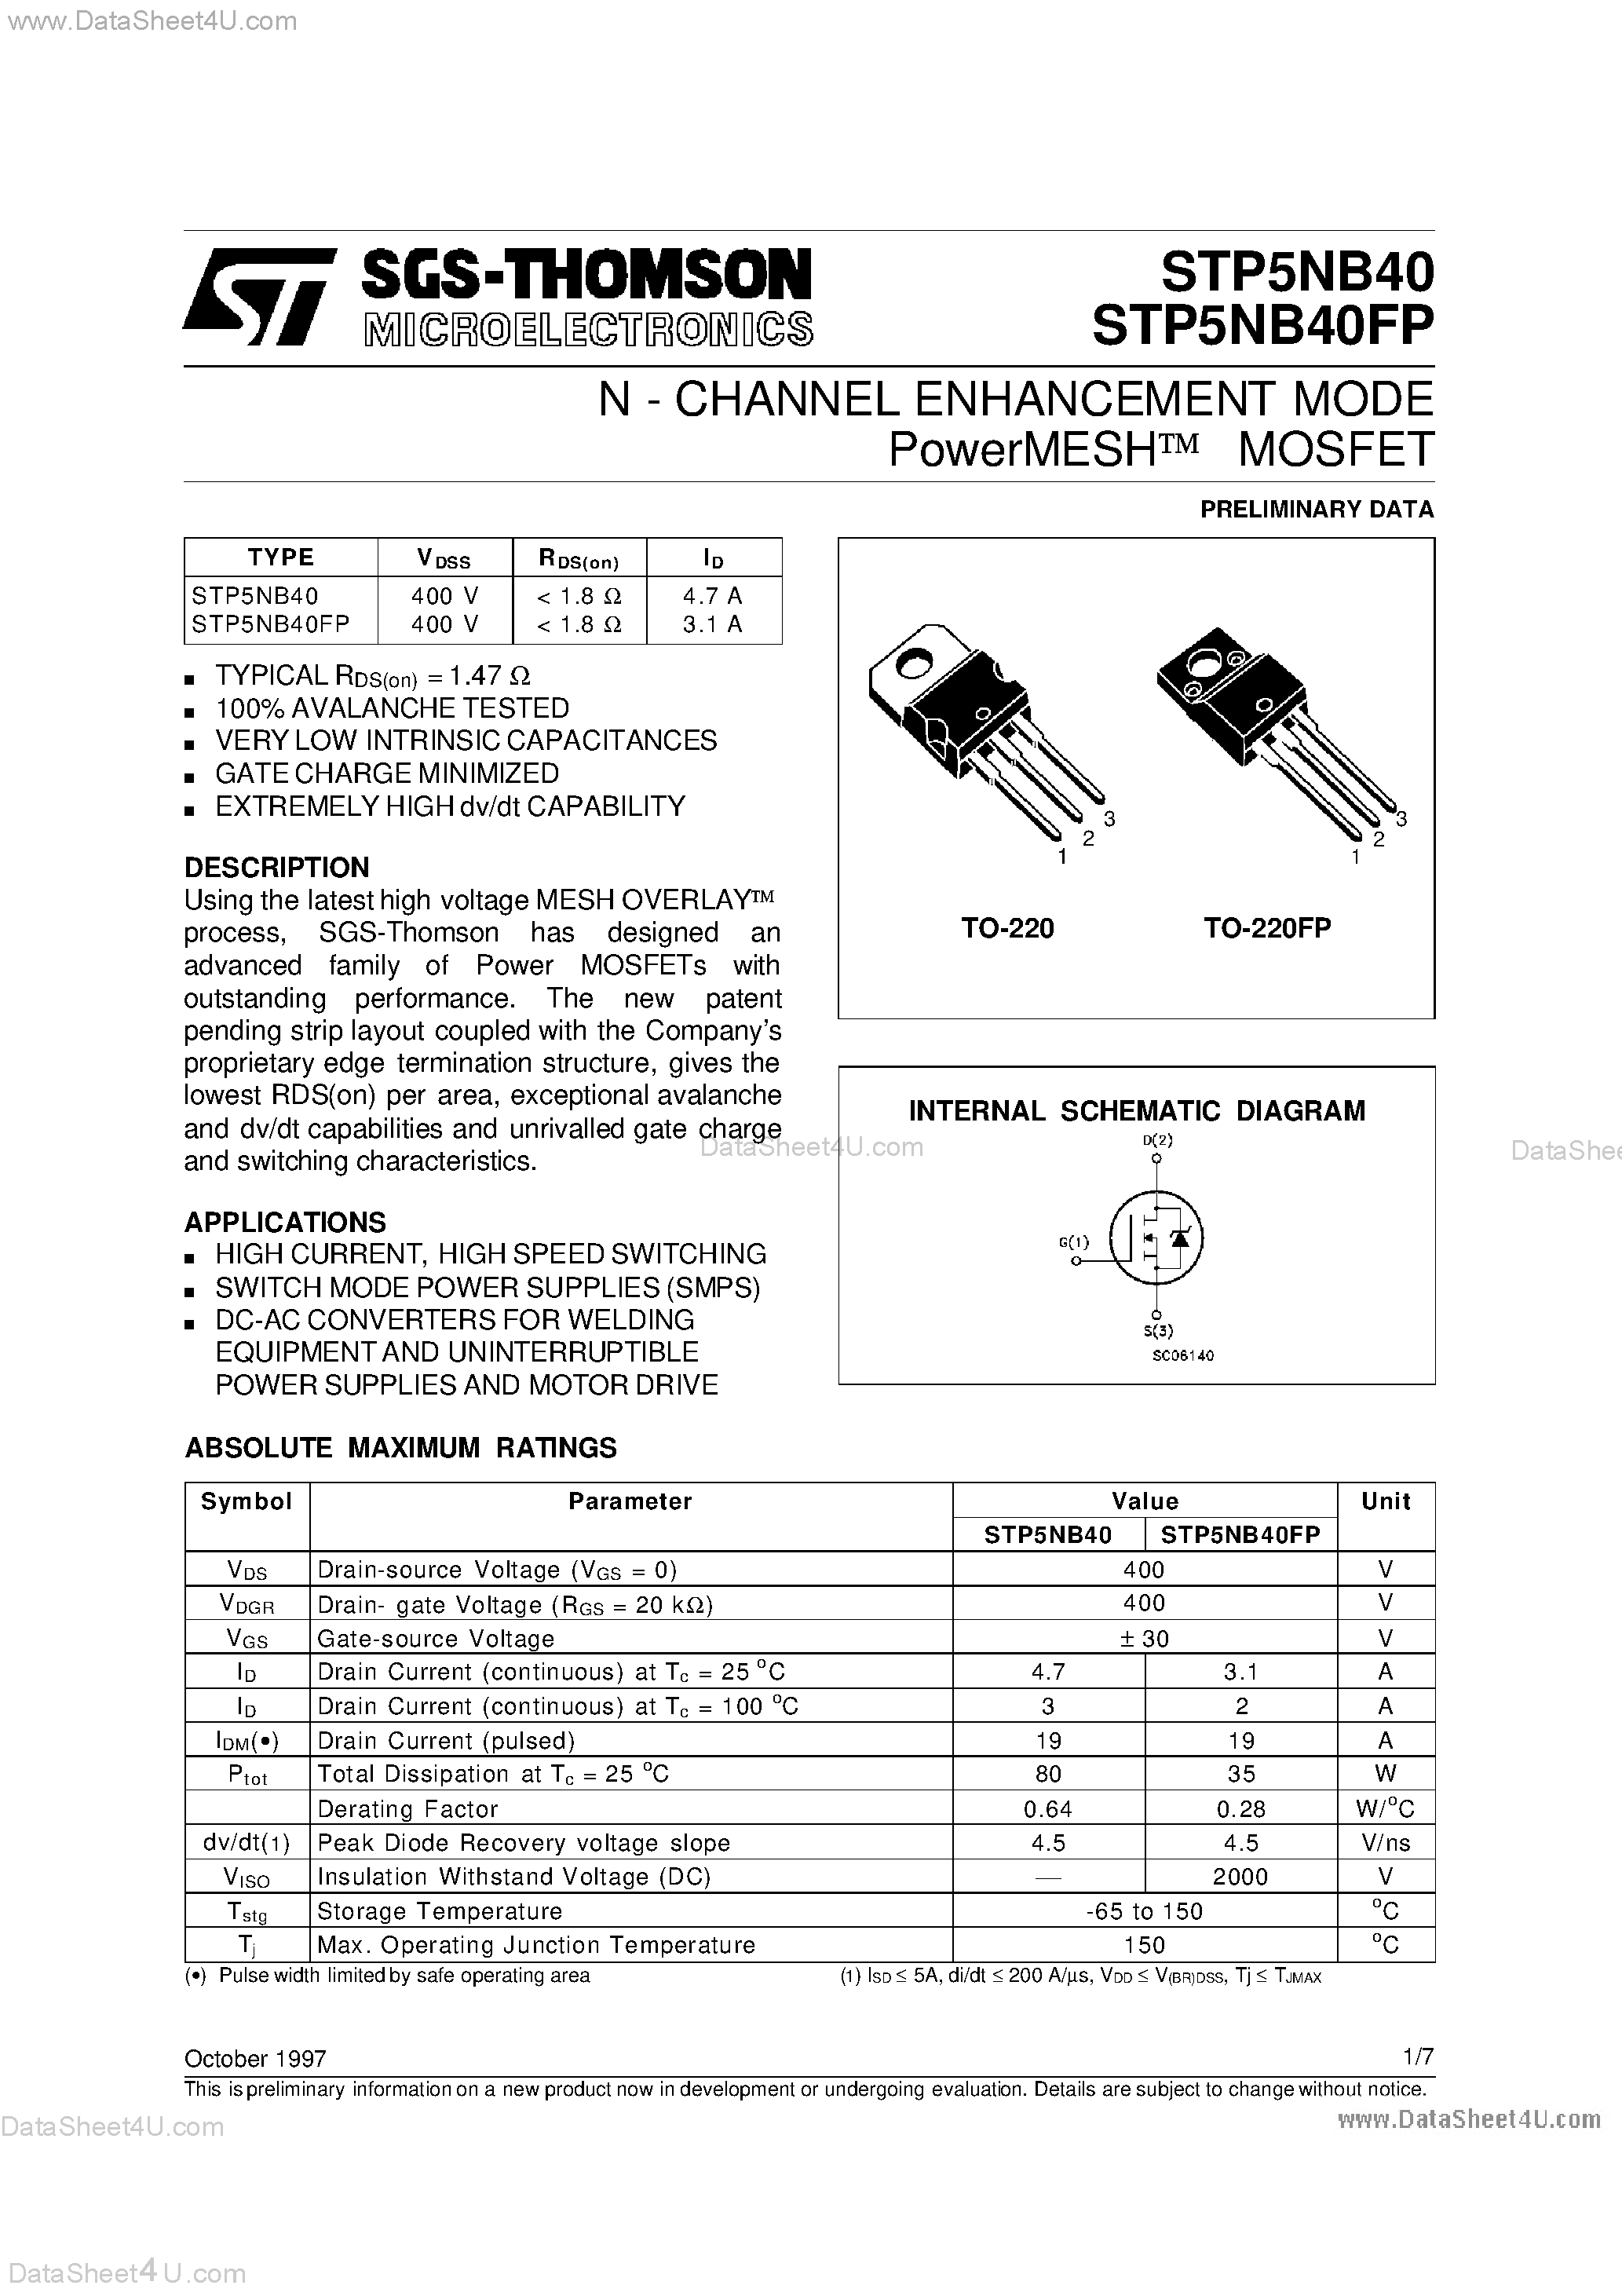 Datasheet STP5NB40 - N - CHANNEL ENHANCEMENT MODE PowerMESH MOSFET page 1